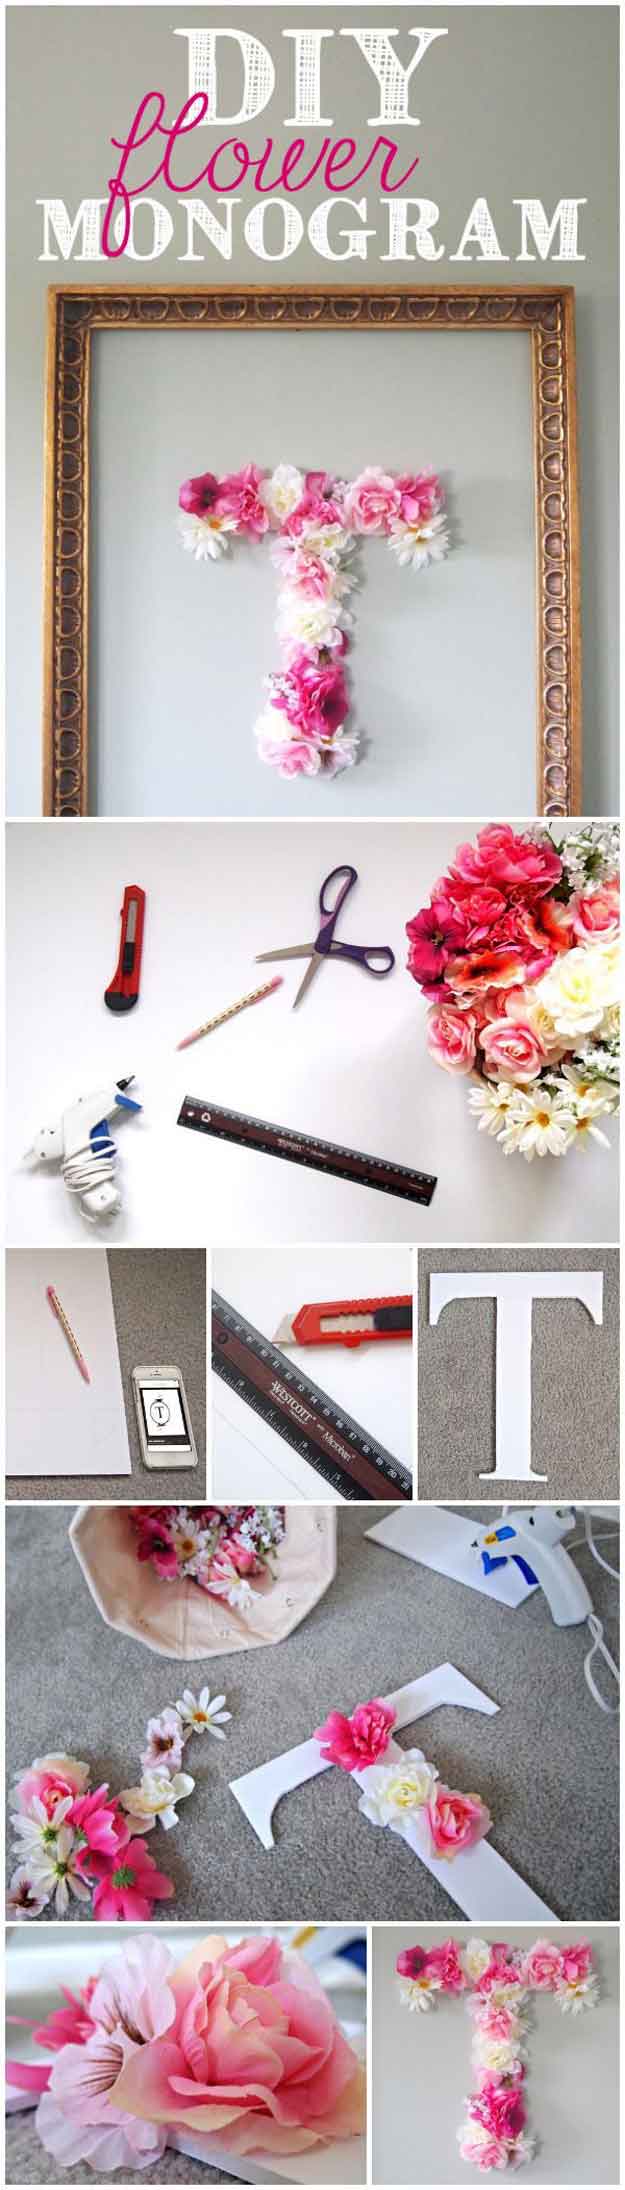 DIY Flower Monogram | DIY Projects for Teens Bedroom | diy bedroom ideas on a budget